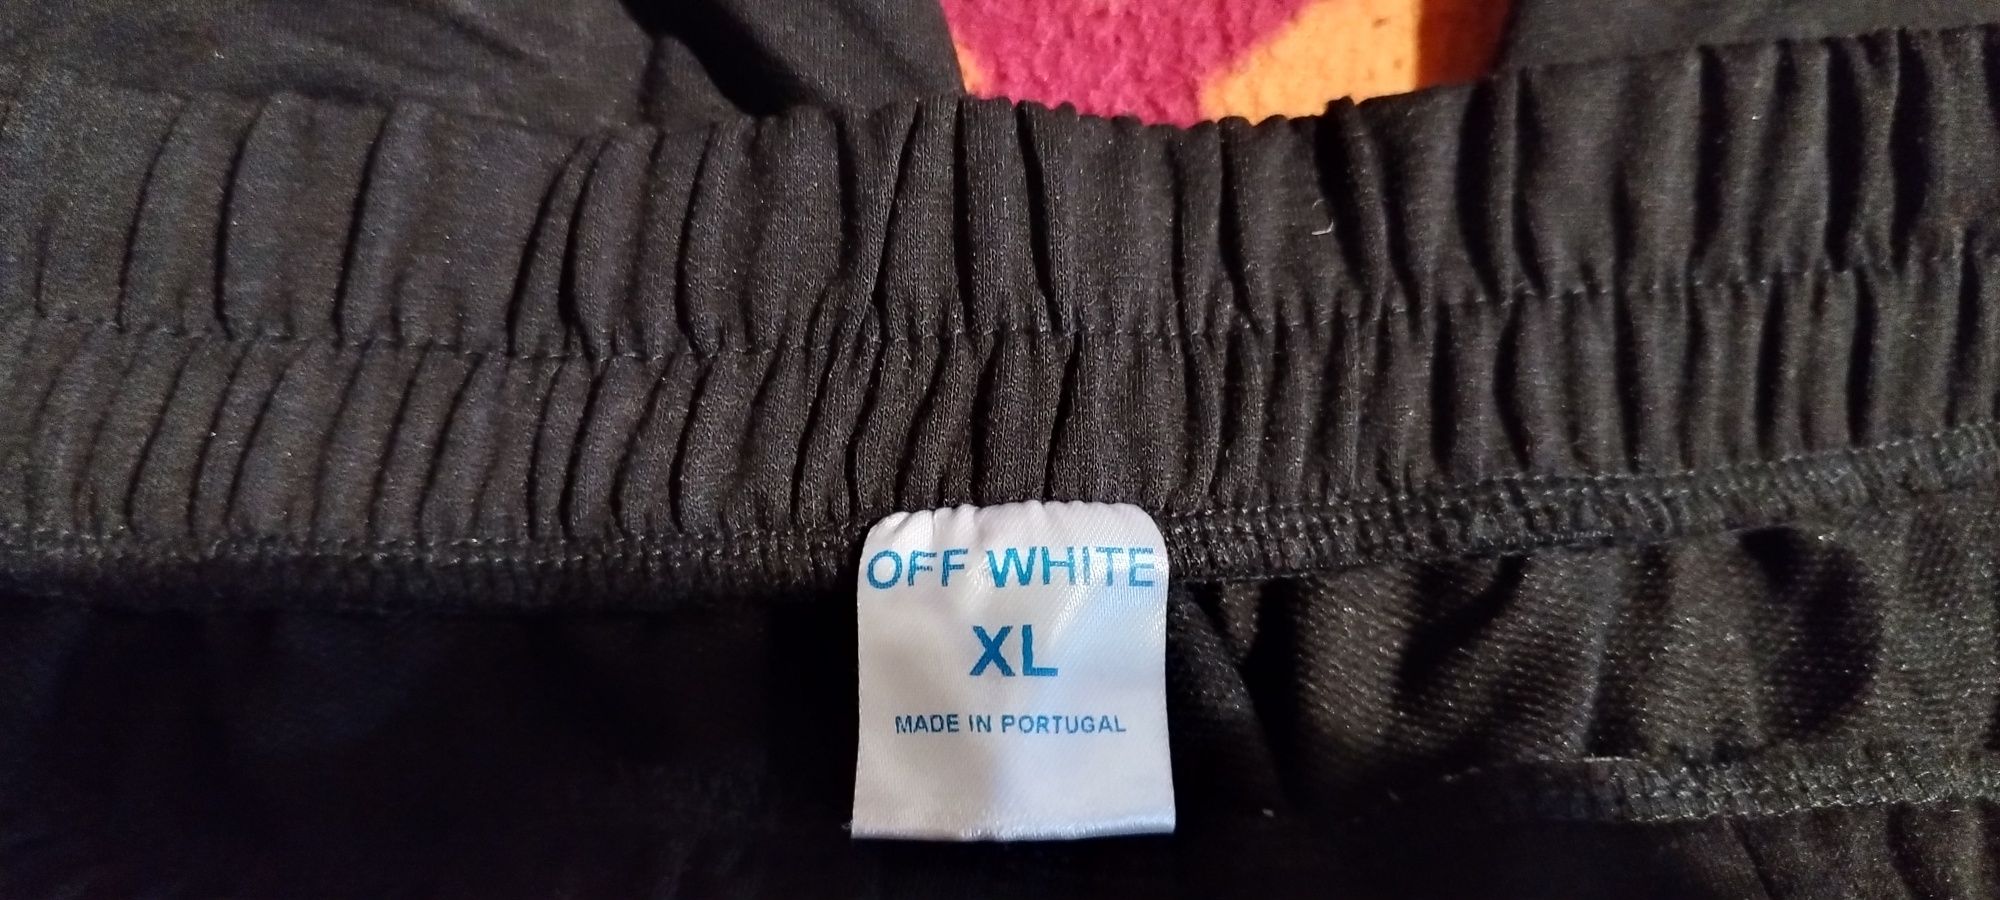 Шорты off white XL